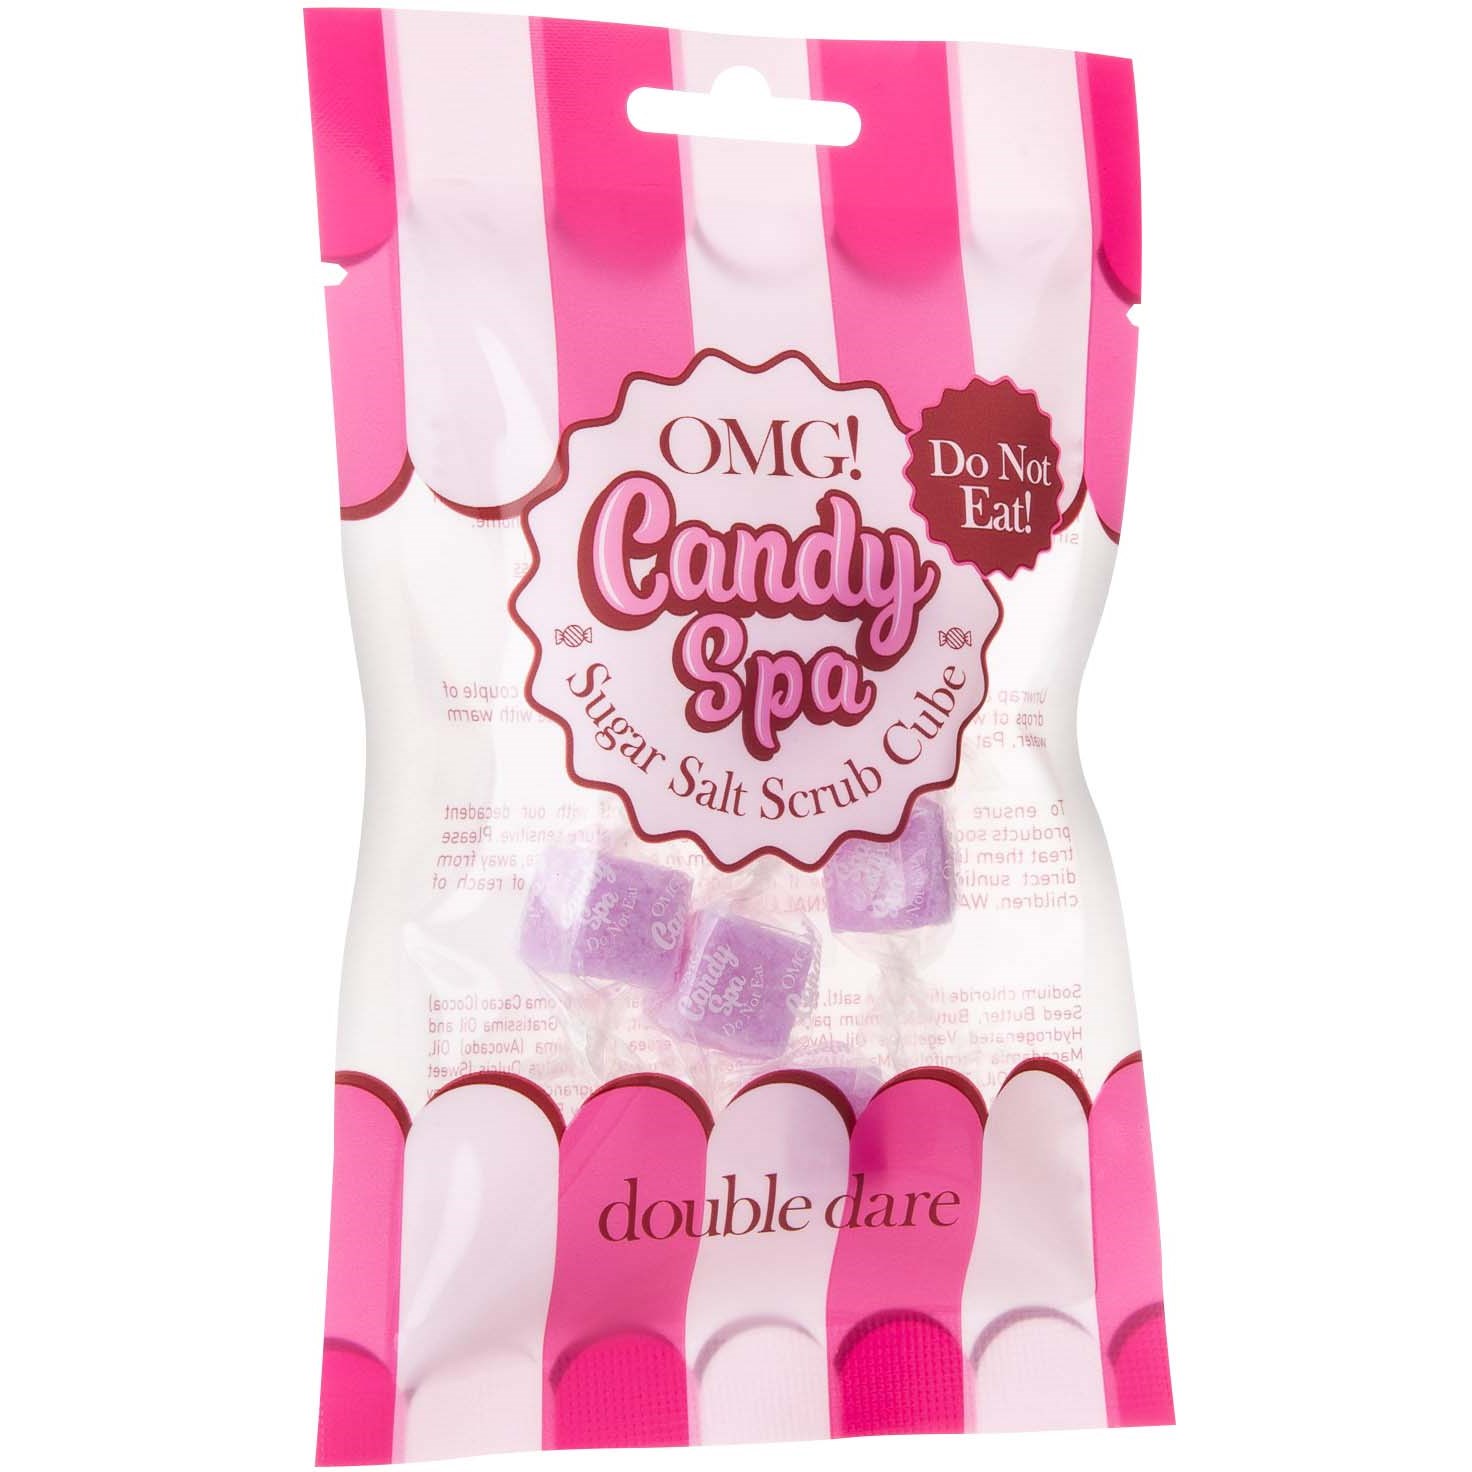 Bilde av Omg! Double Dare Candy Spa: Sugar Salt Scrub Cube #06 Miracle Vit E